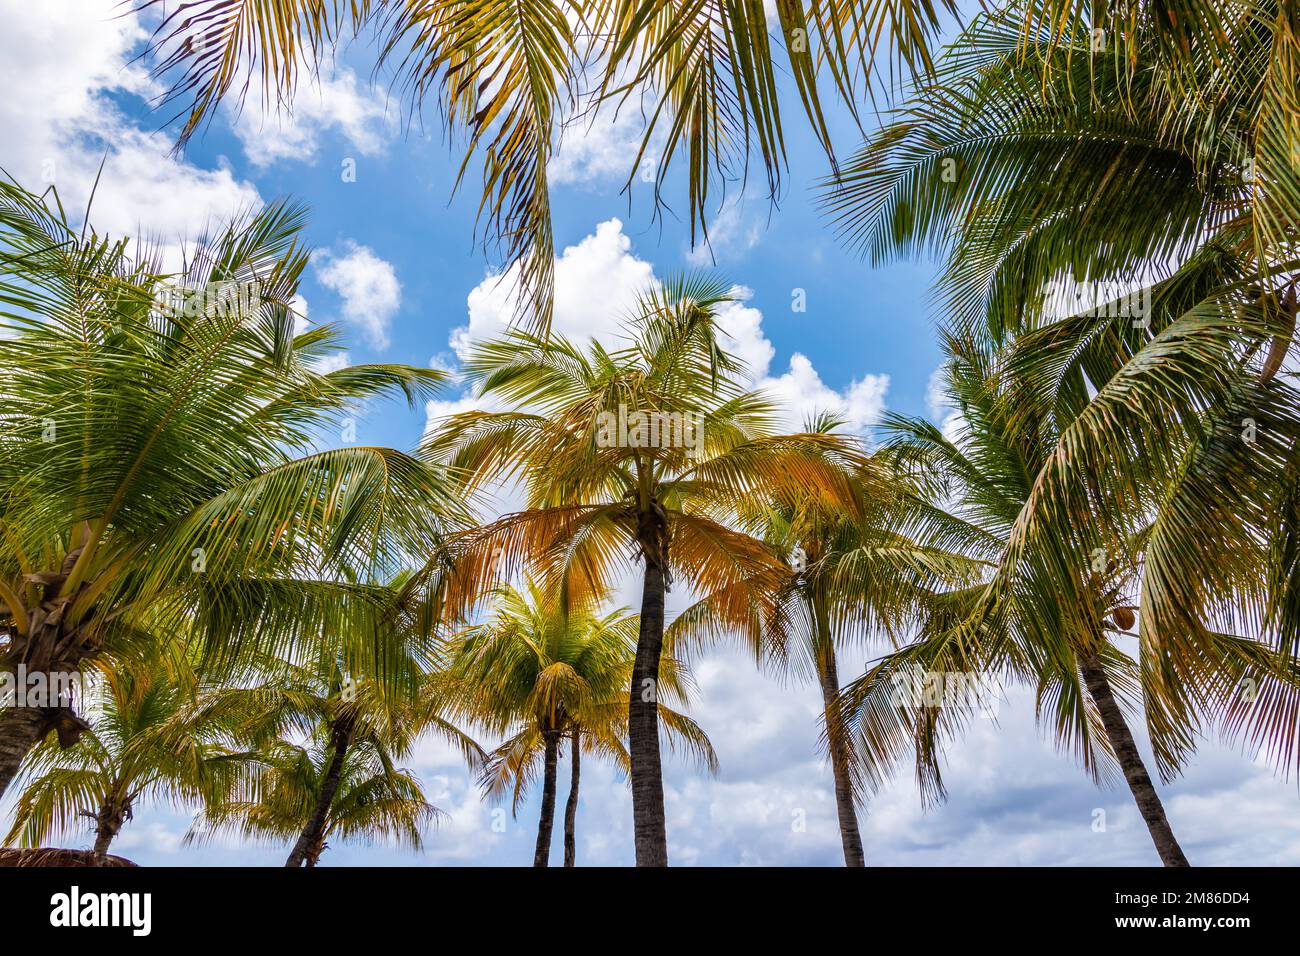 Coconut palm trees against blue sky on Caribbean Island. Stock Photo